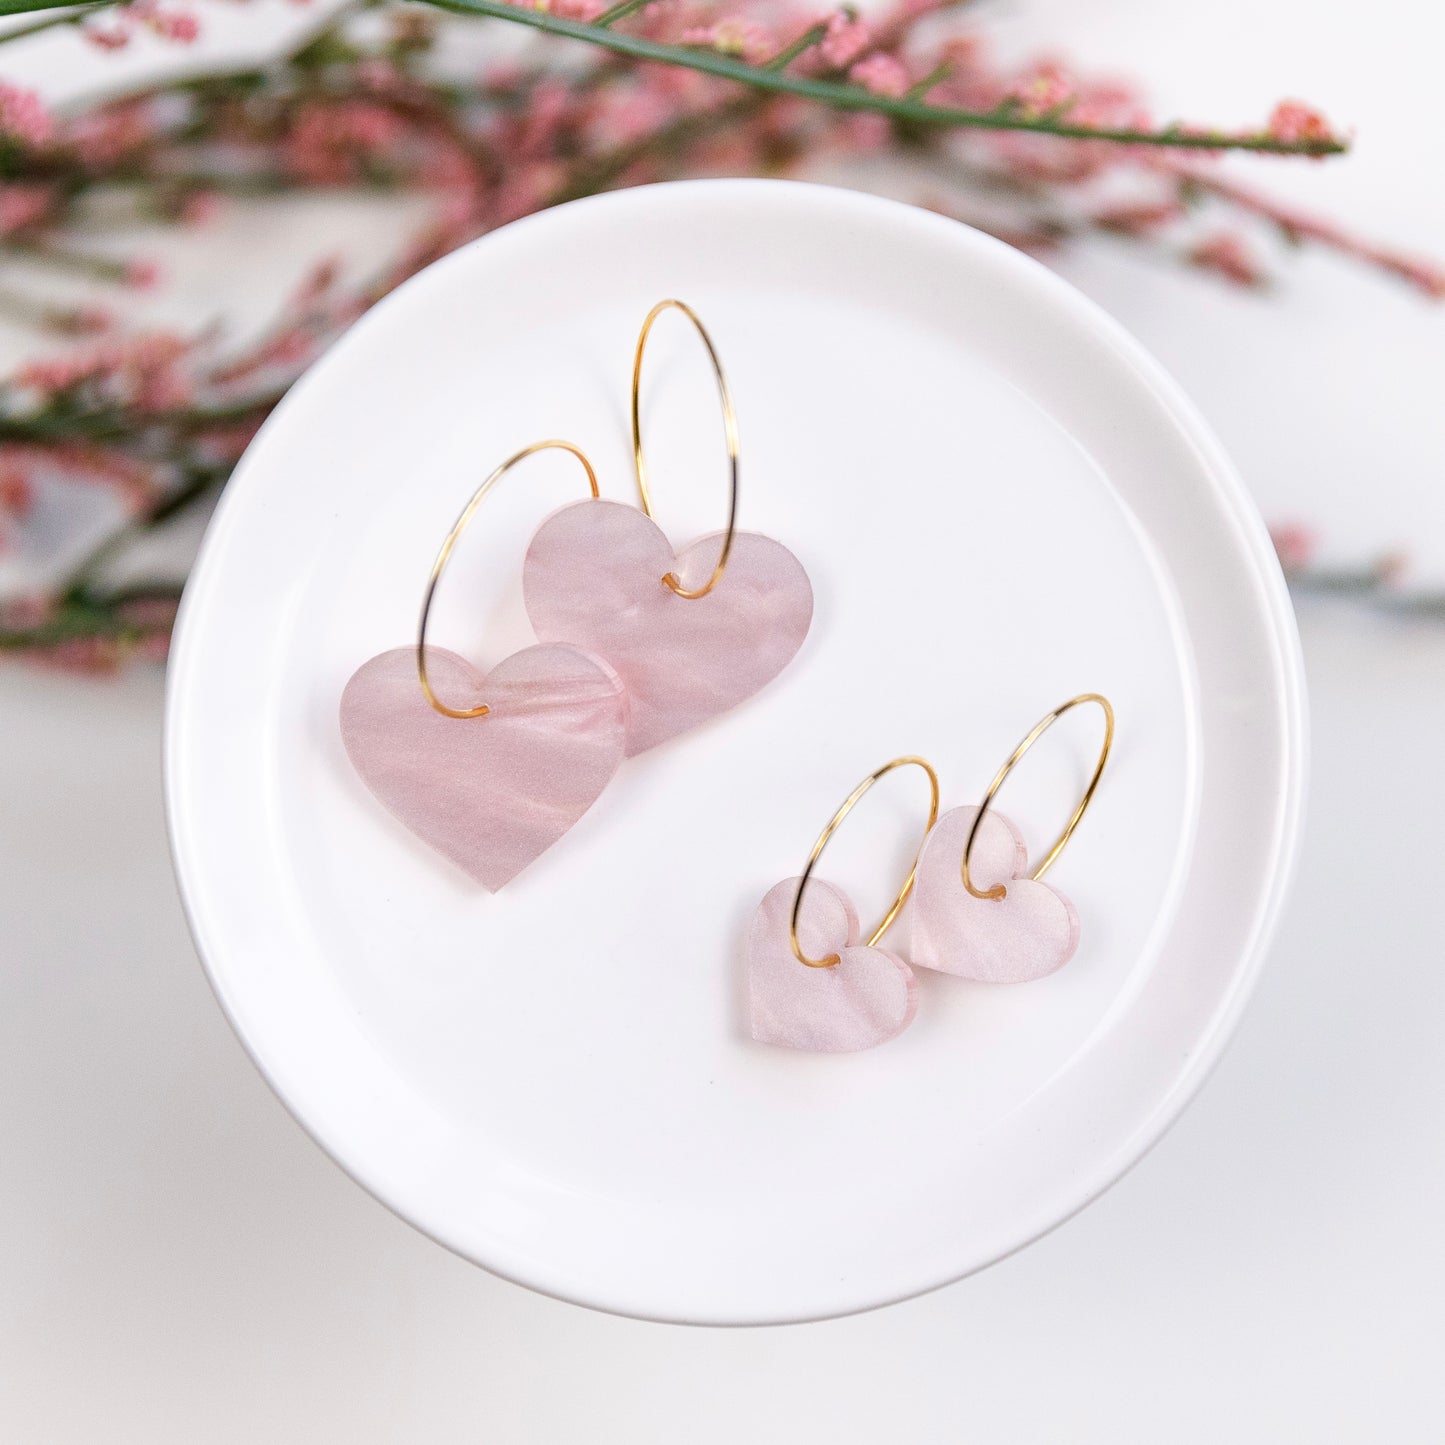 THE HEART HOOP in Pink Pearl Shimmer/ Lightweight Acrylic Statement Hoop Earrings